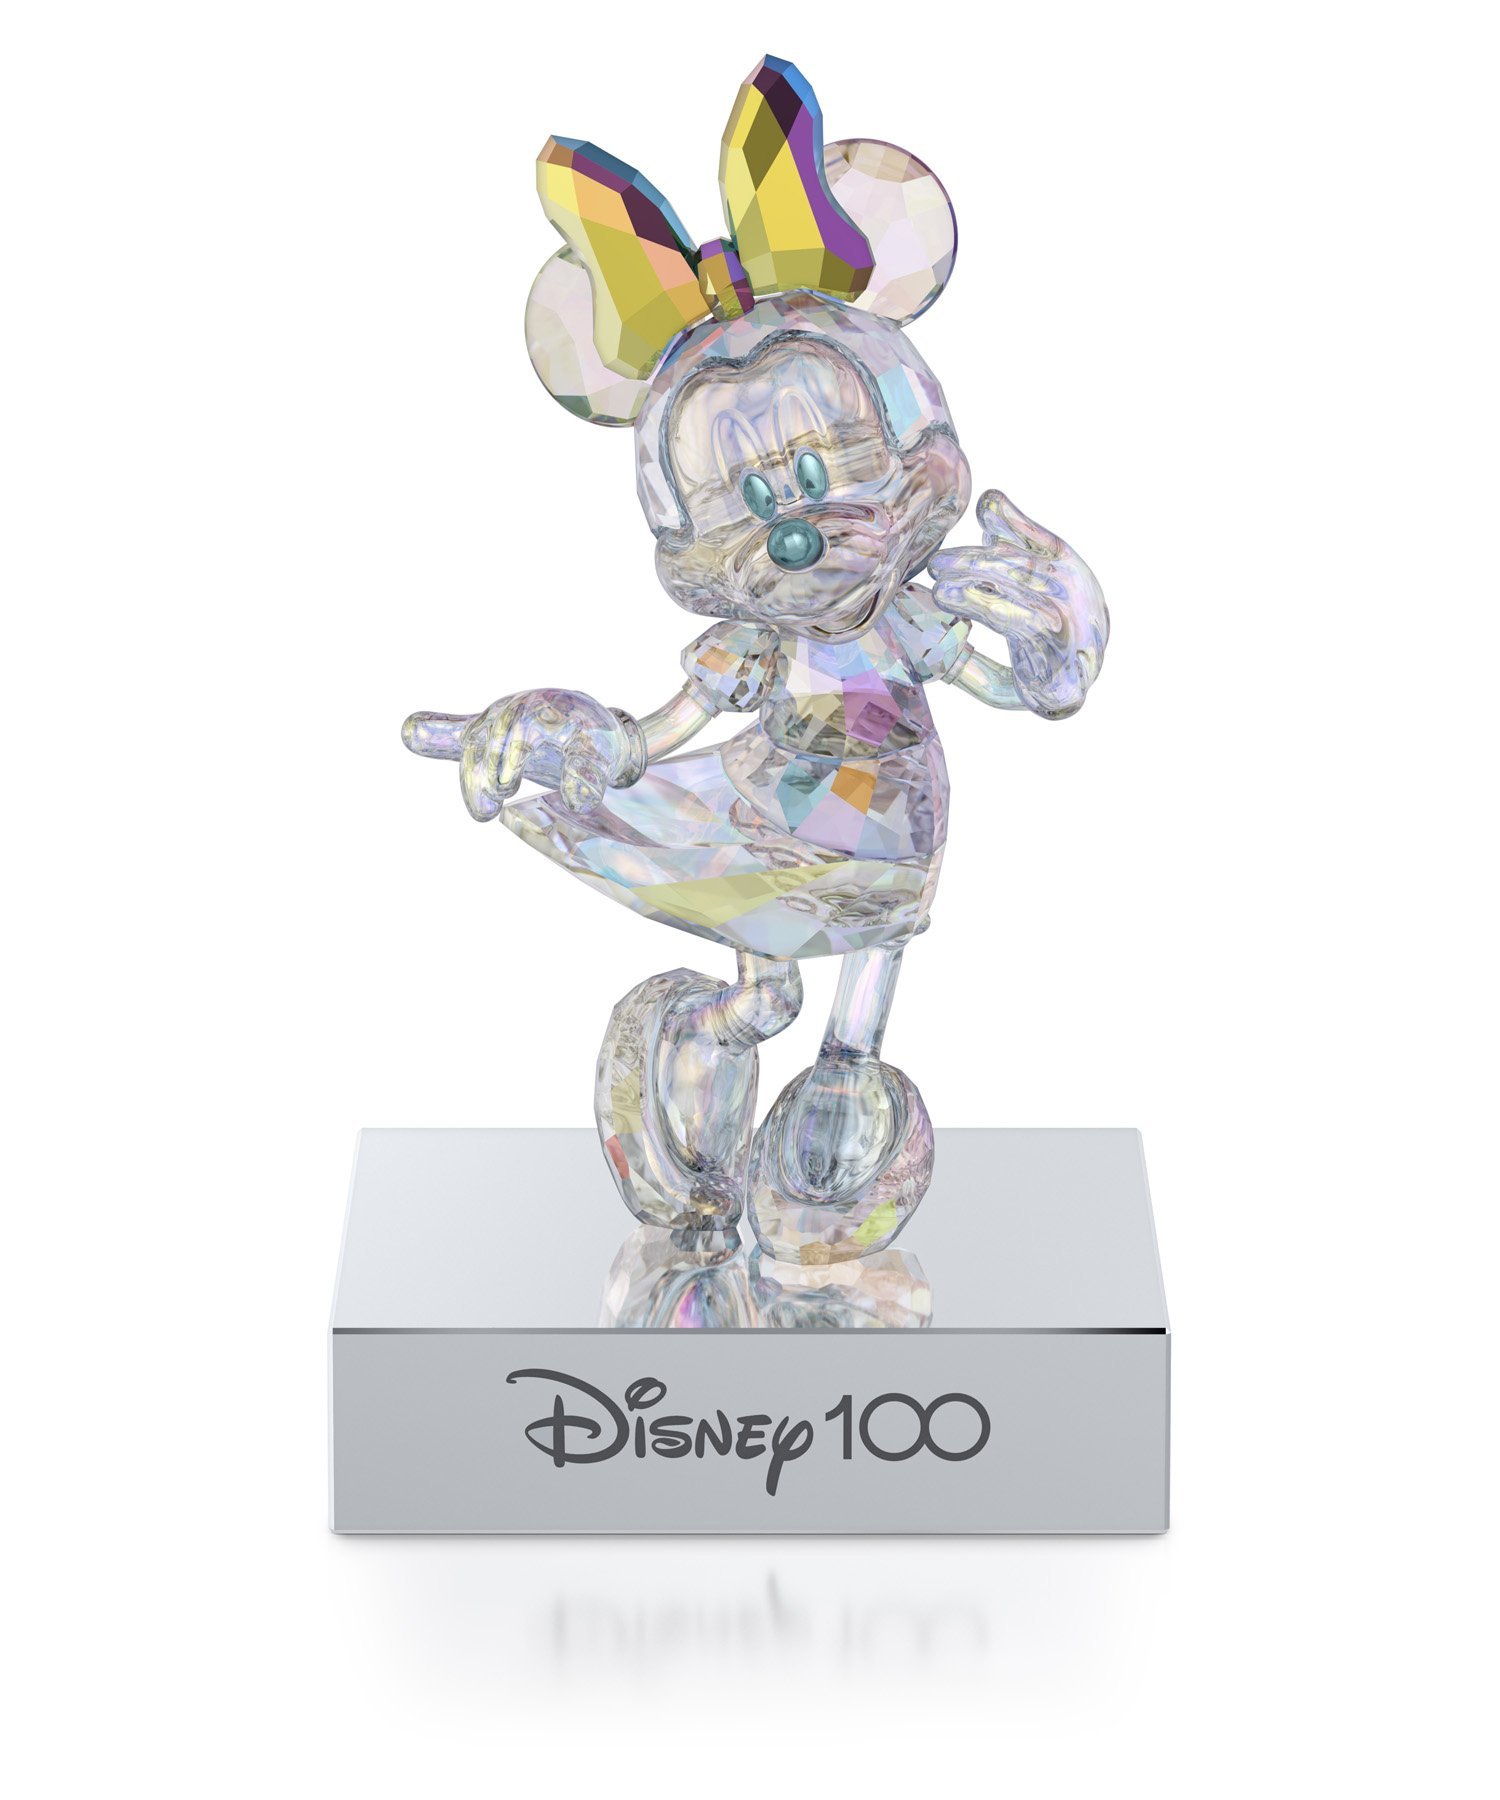 SWAROVSKI 【公式】【スワロフスキー】Disney100 Minnie Mouse スワロフスキー インテリア・生活雑貨 オブジェ・置物・アート【送料無料】